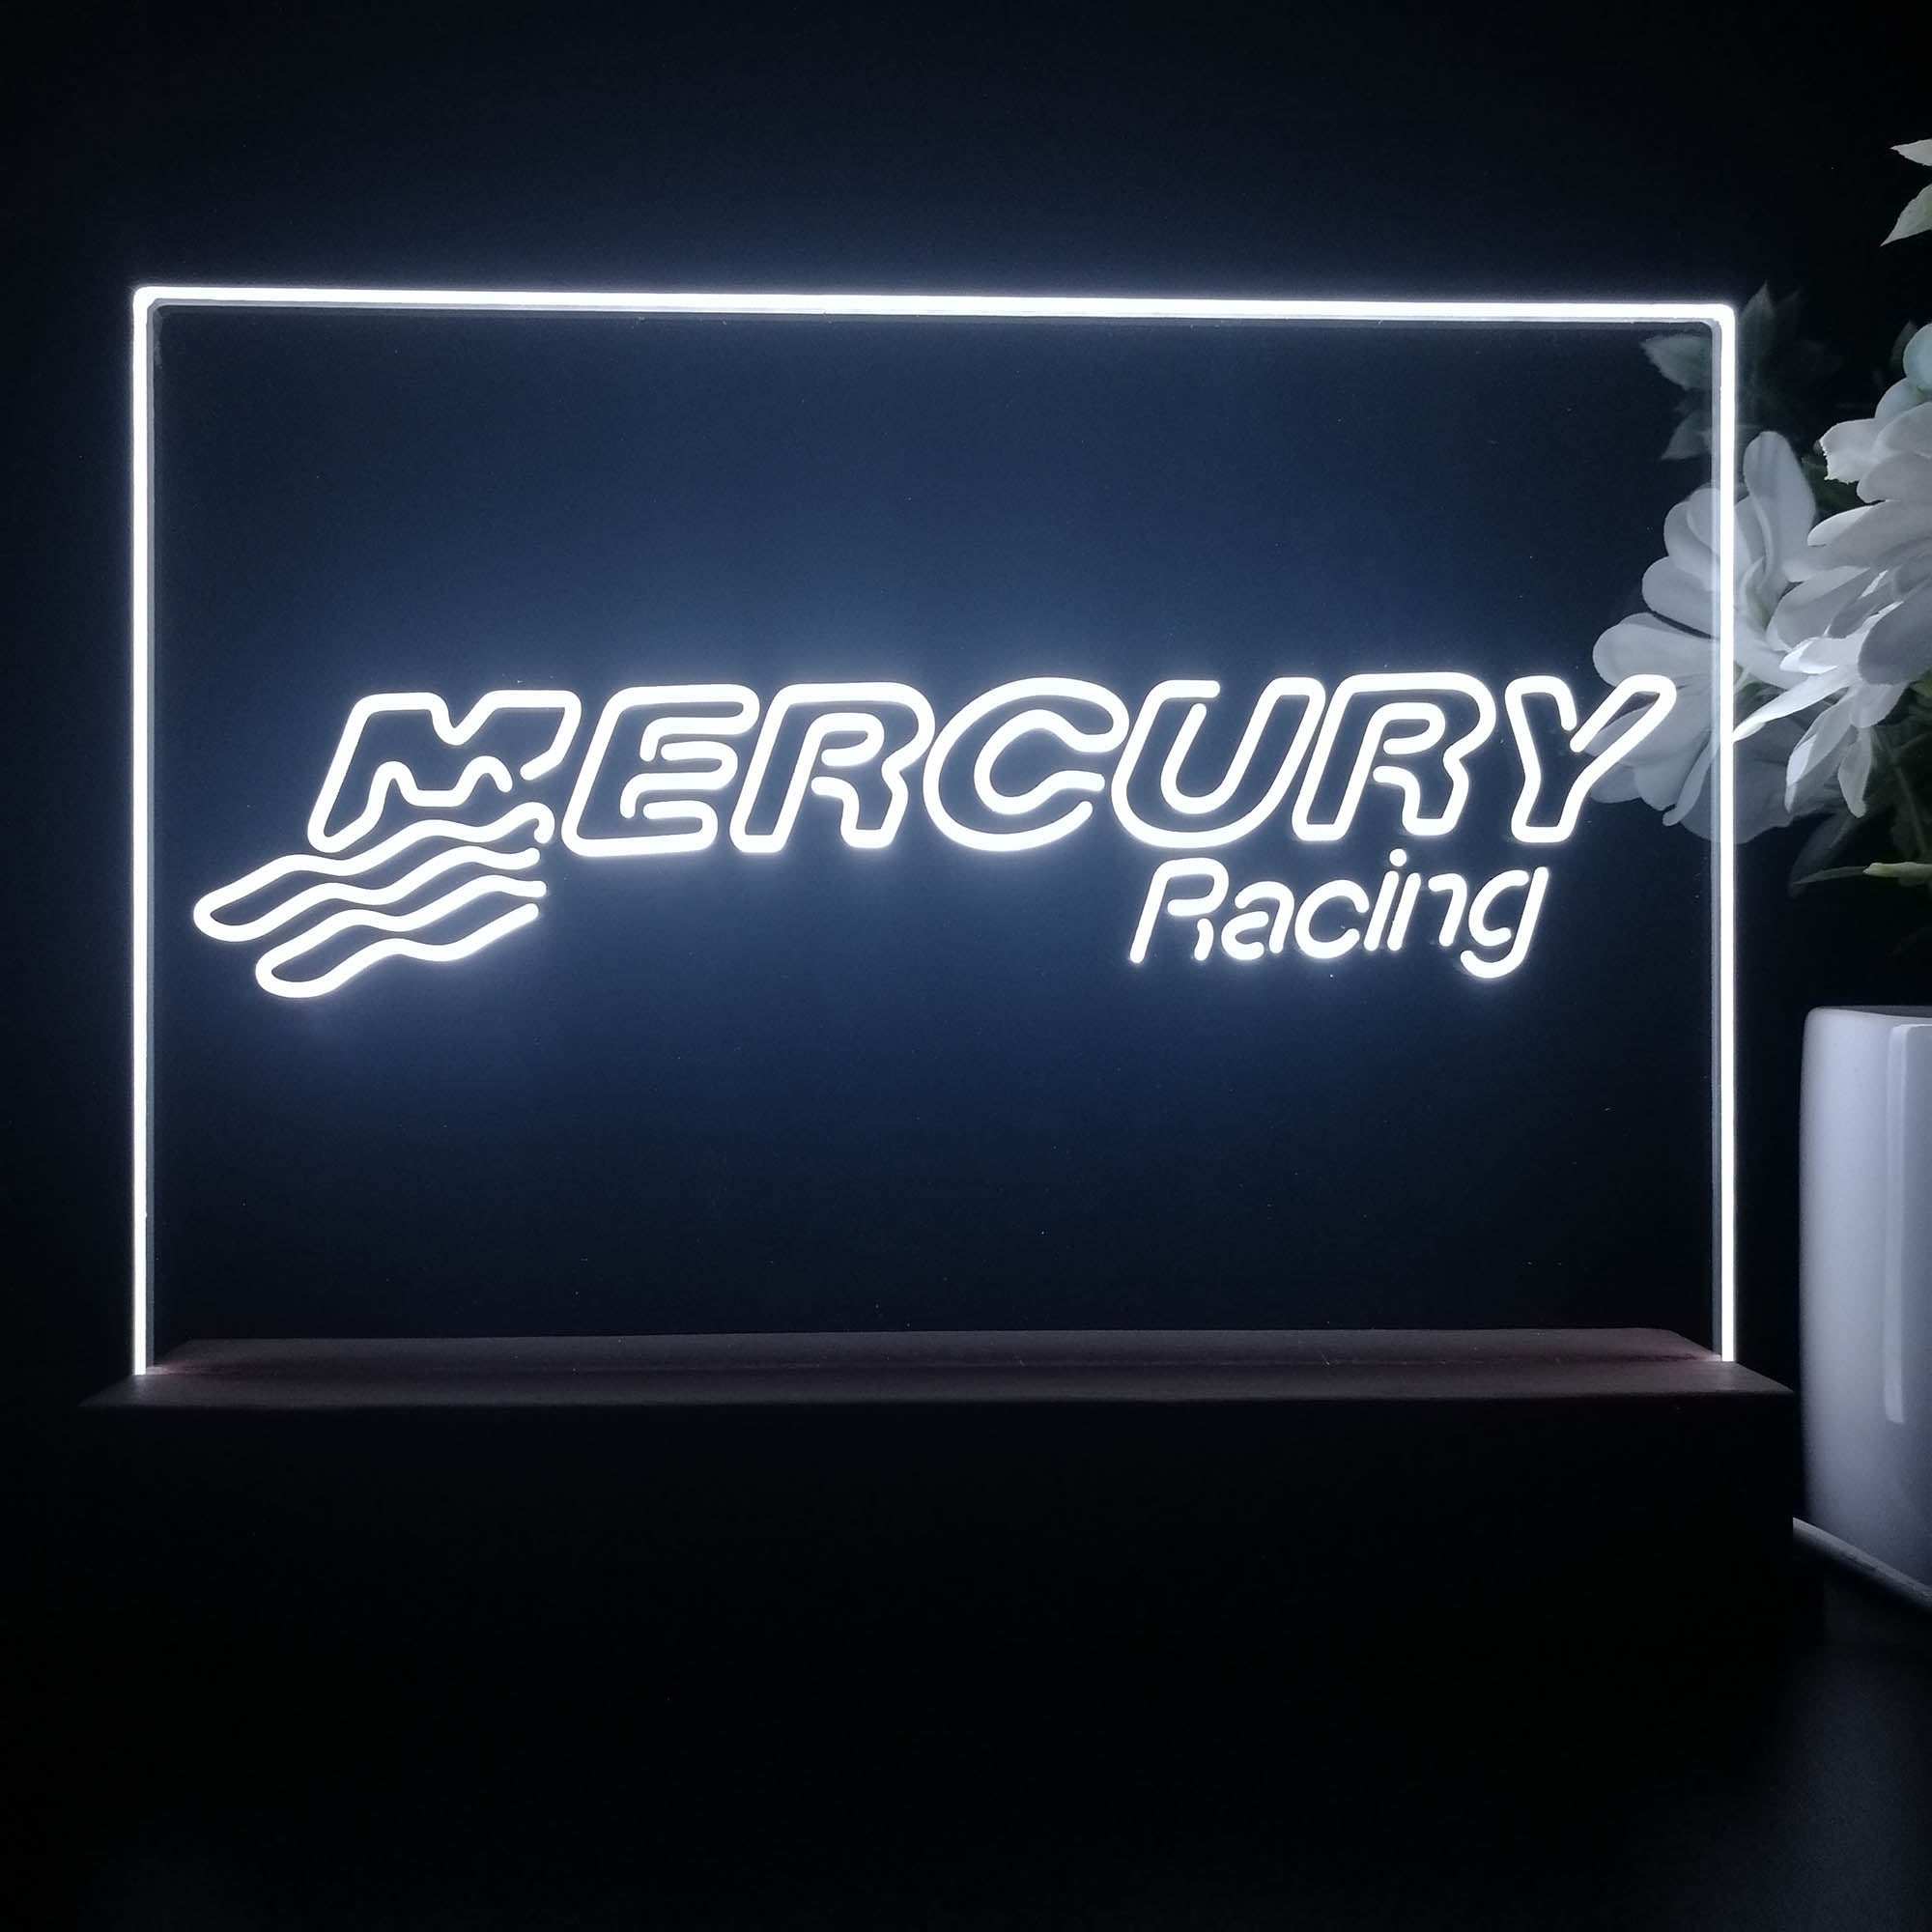 Mercury Racing 3D Illusion Night Light Desk Lamp